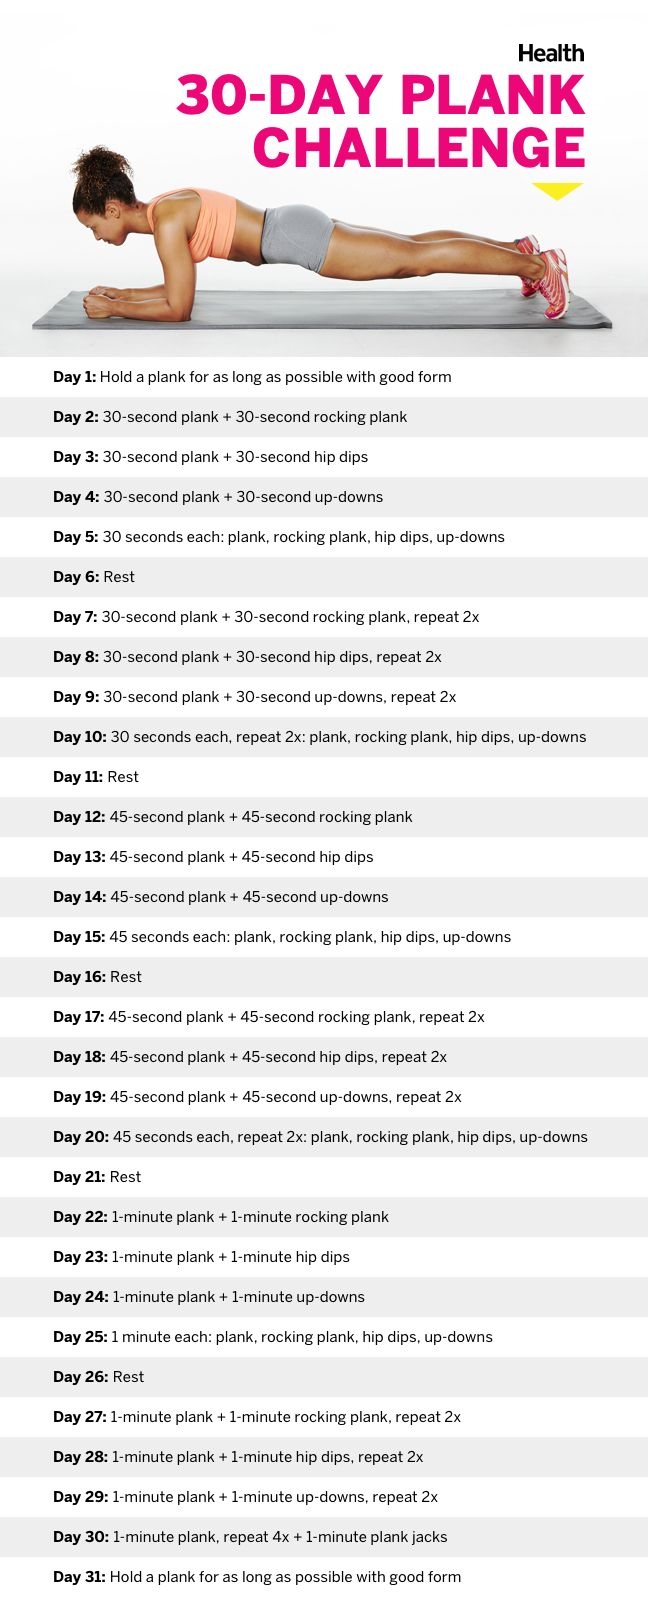 30-Day Plank Challenge | Health